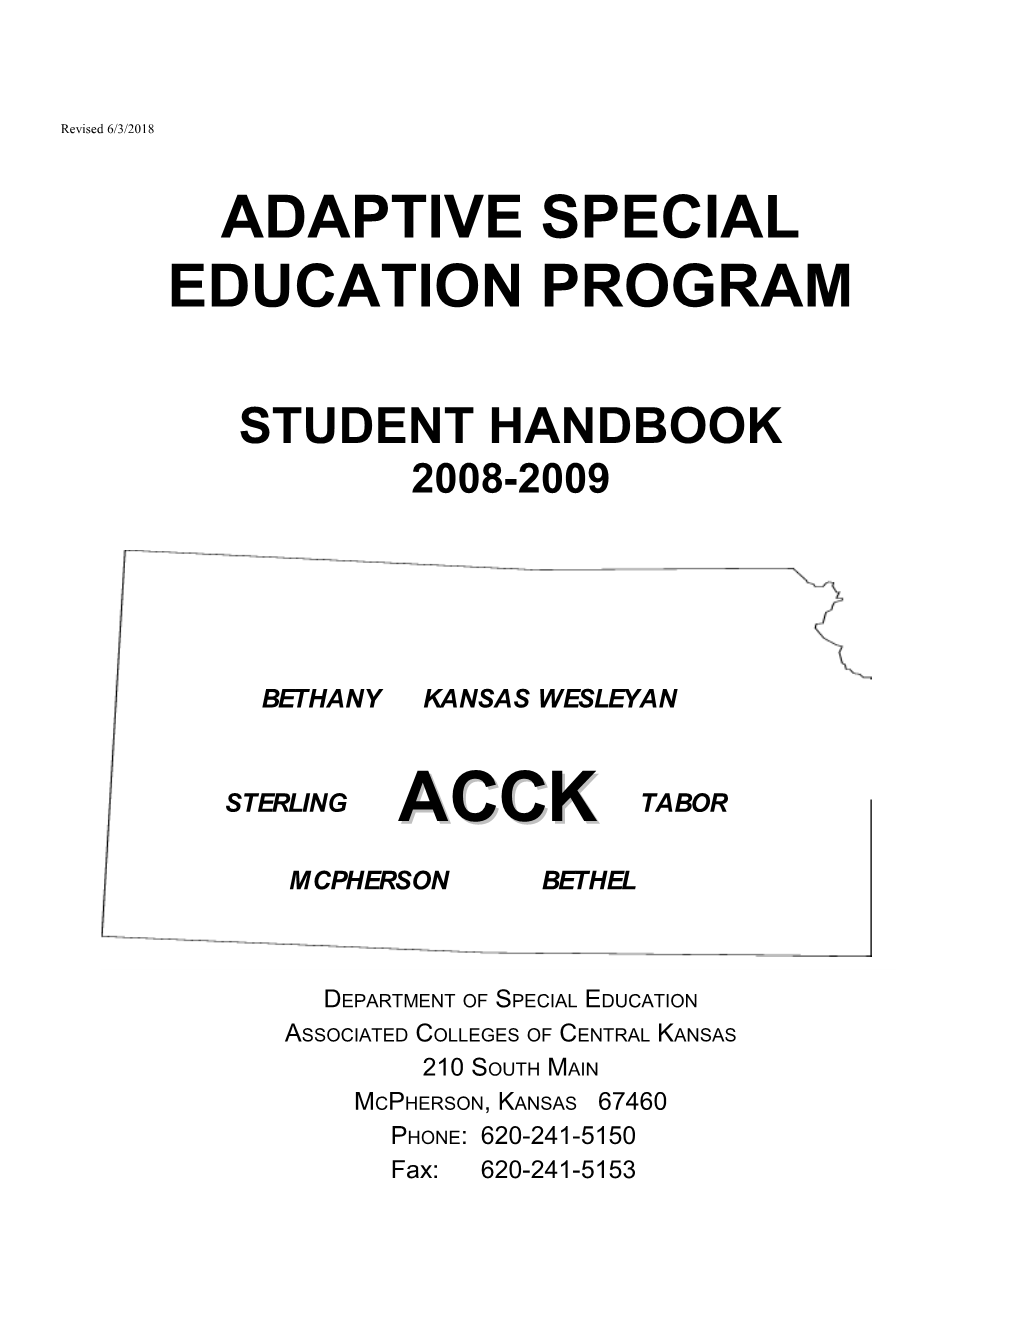 Programs in Special Education